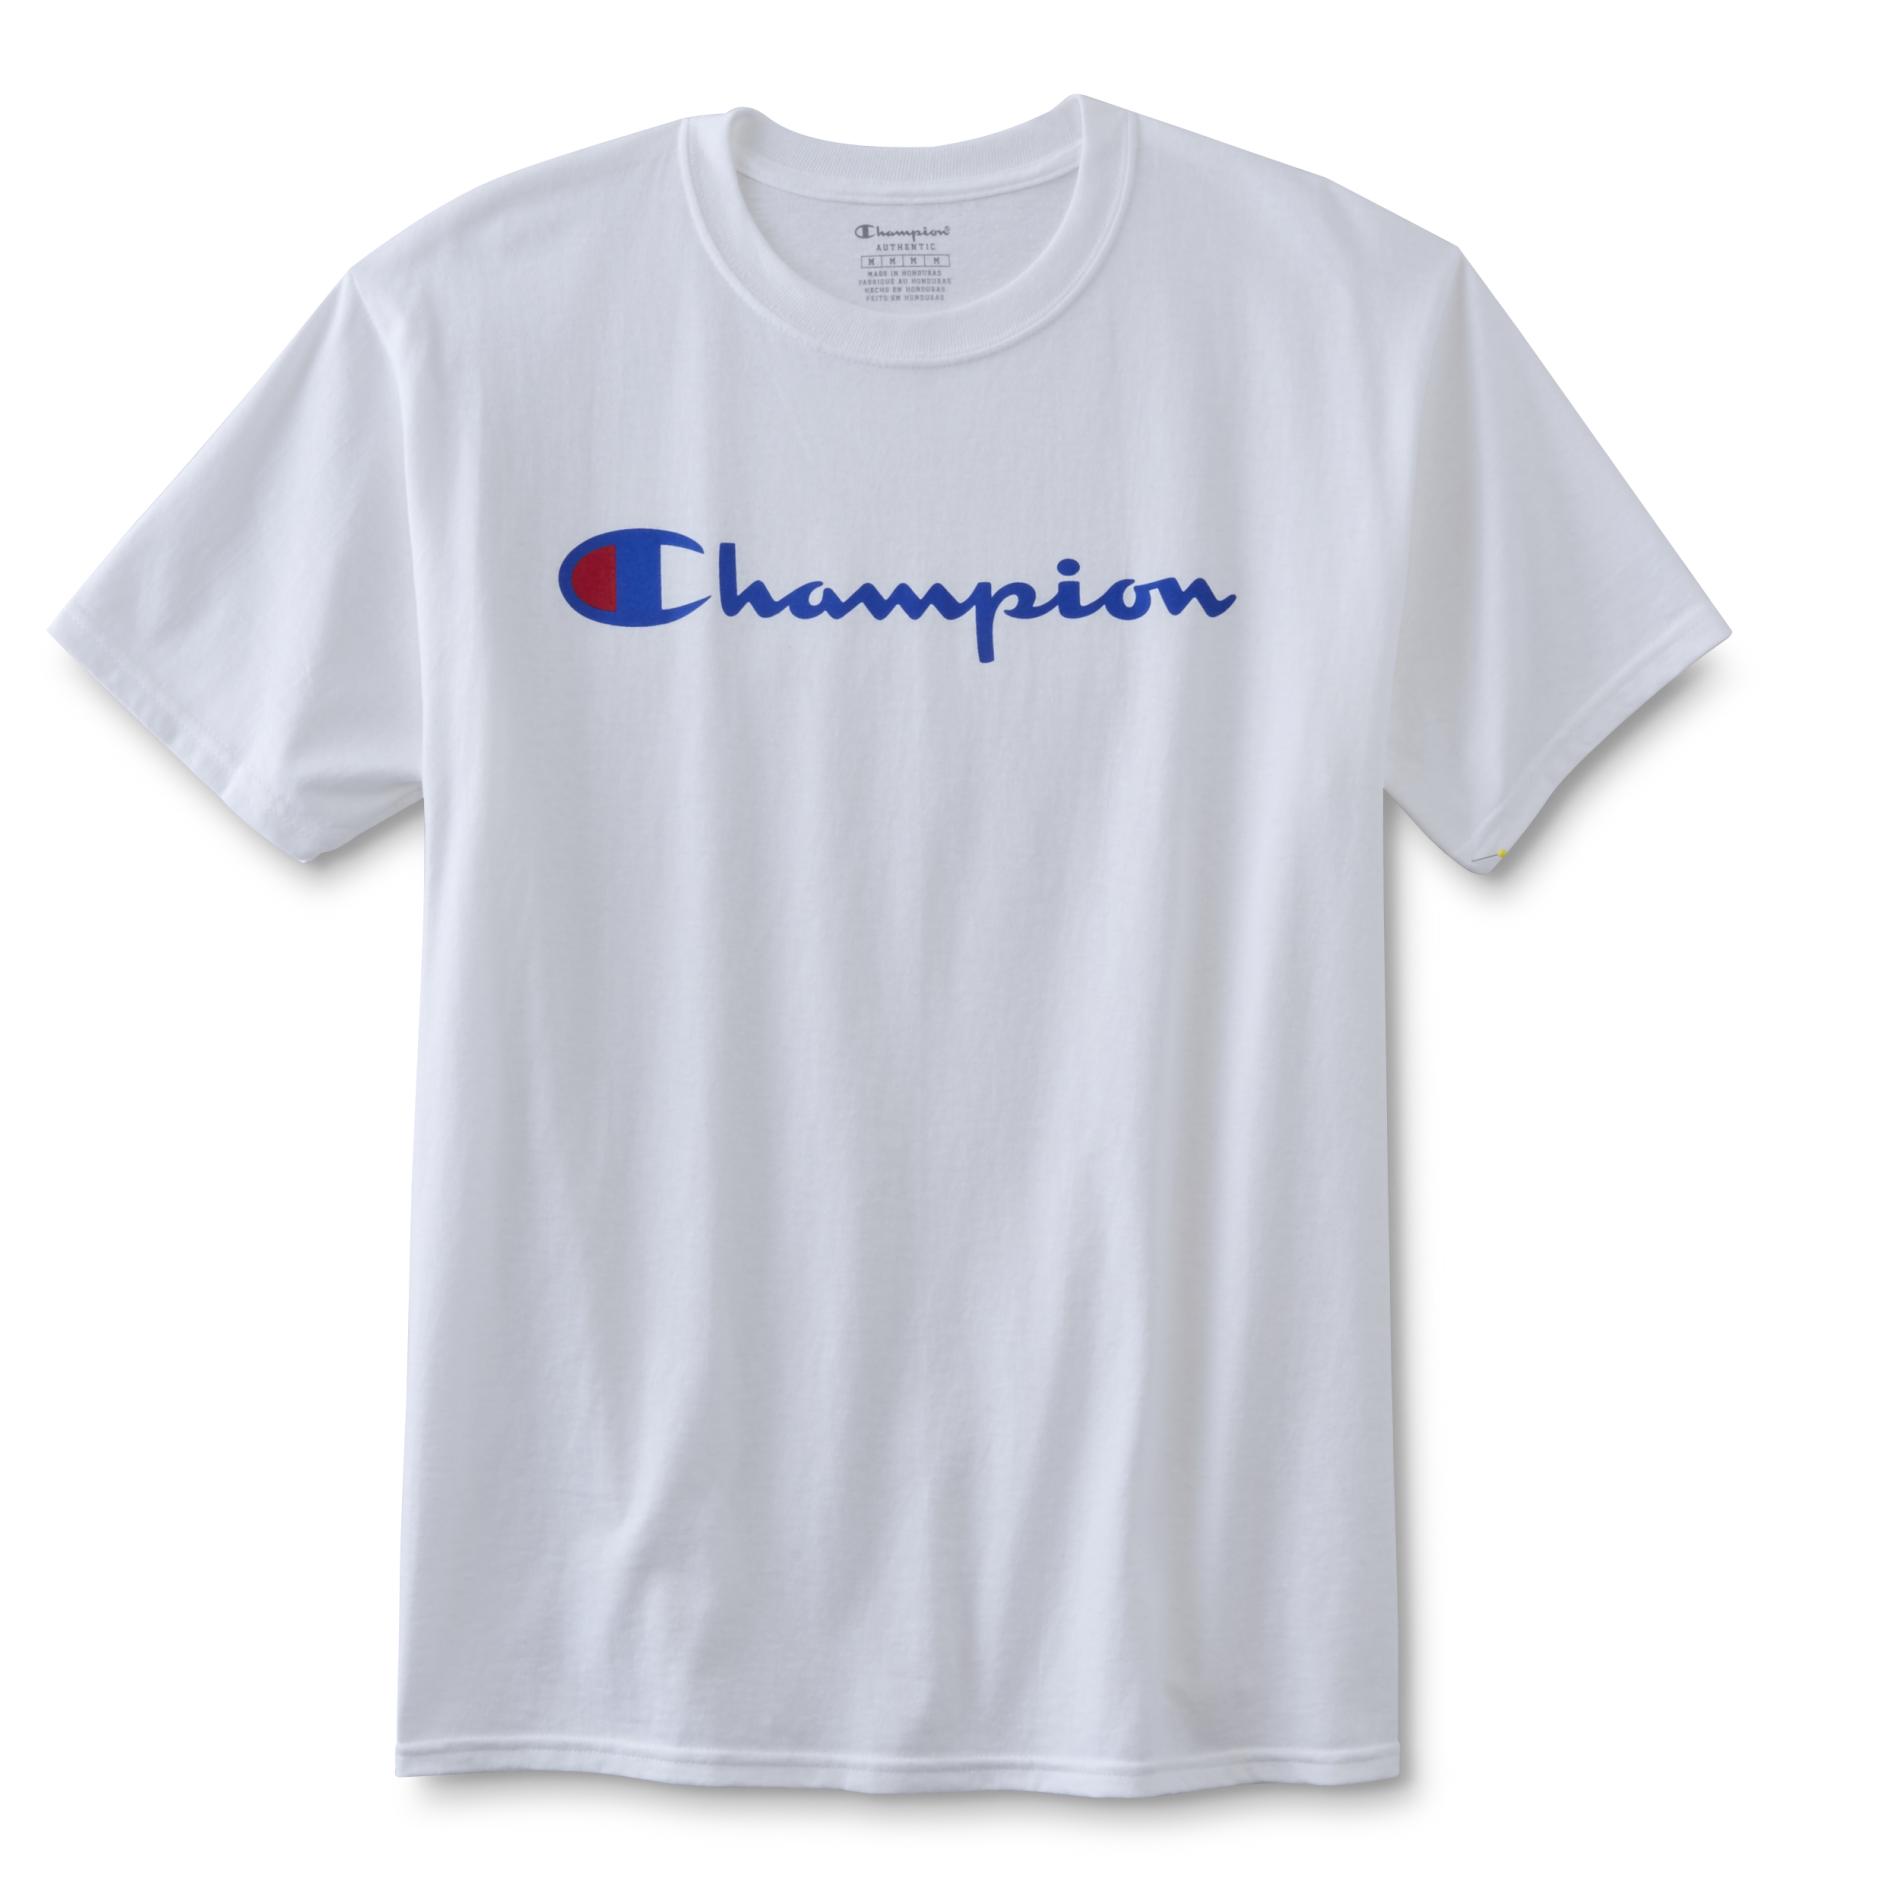 sears champion shirt, OFF 71%,Free 